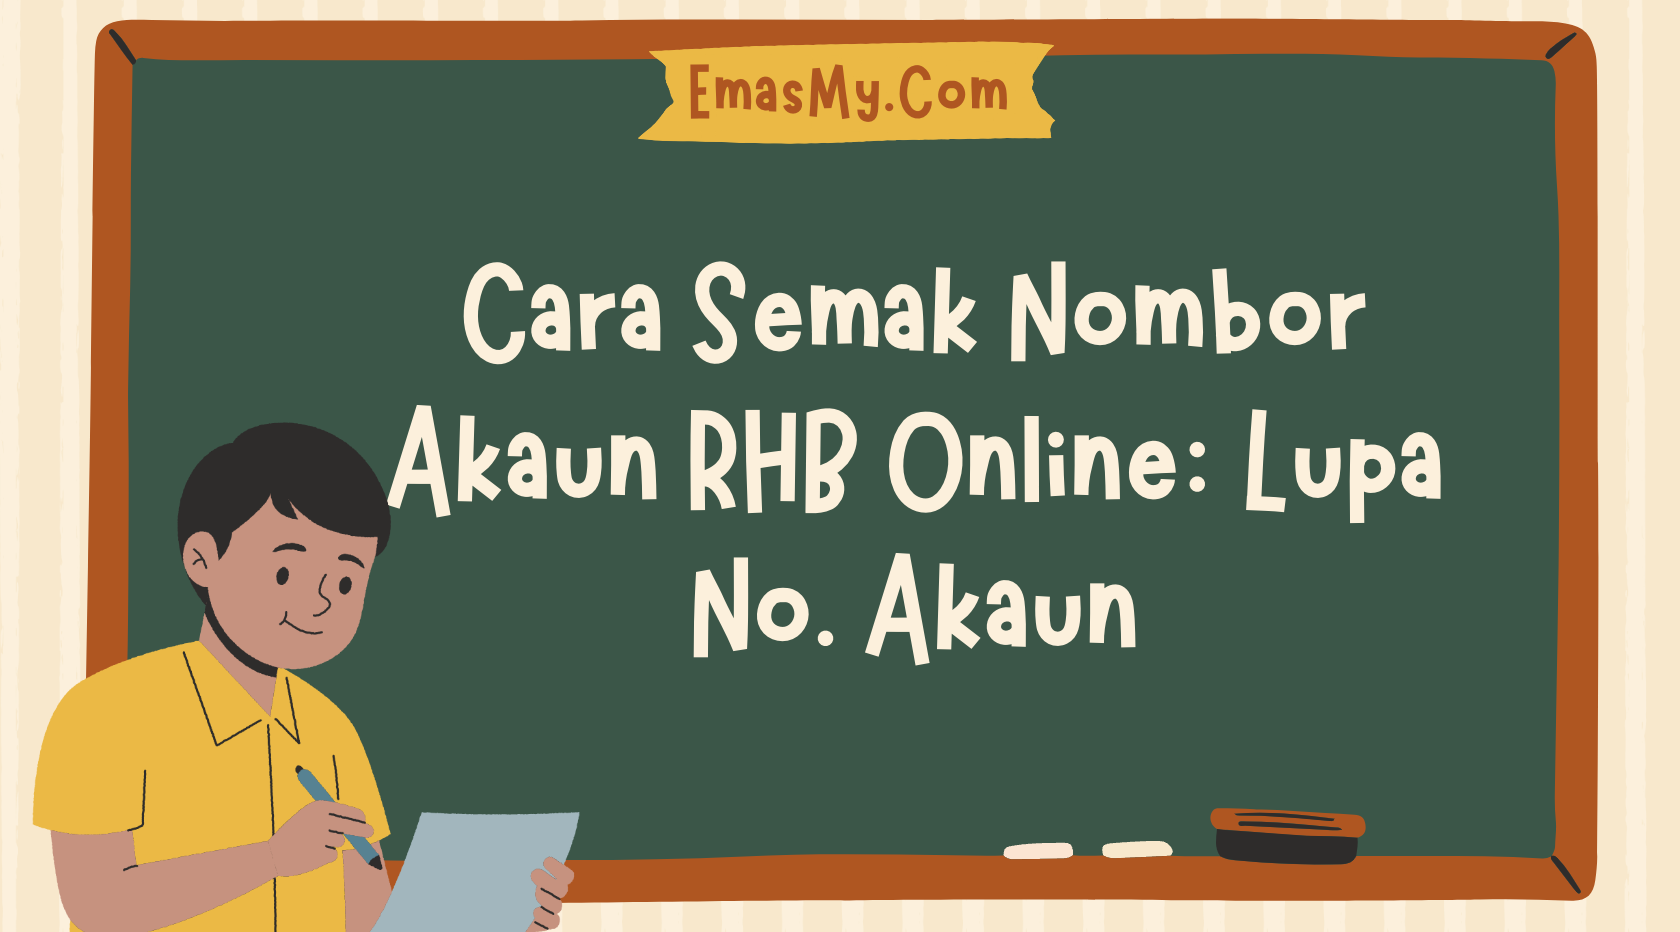 Cara Semak Nombor Akaun RHB Online